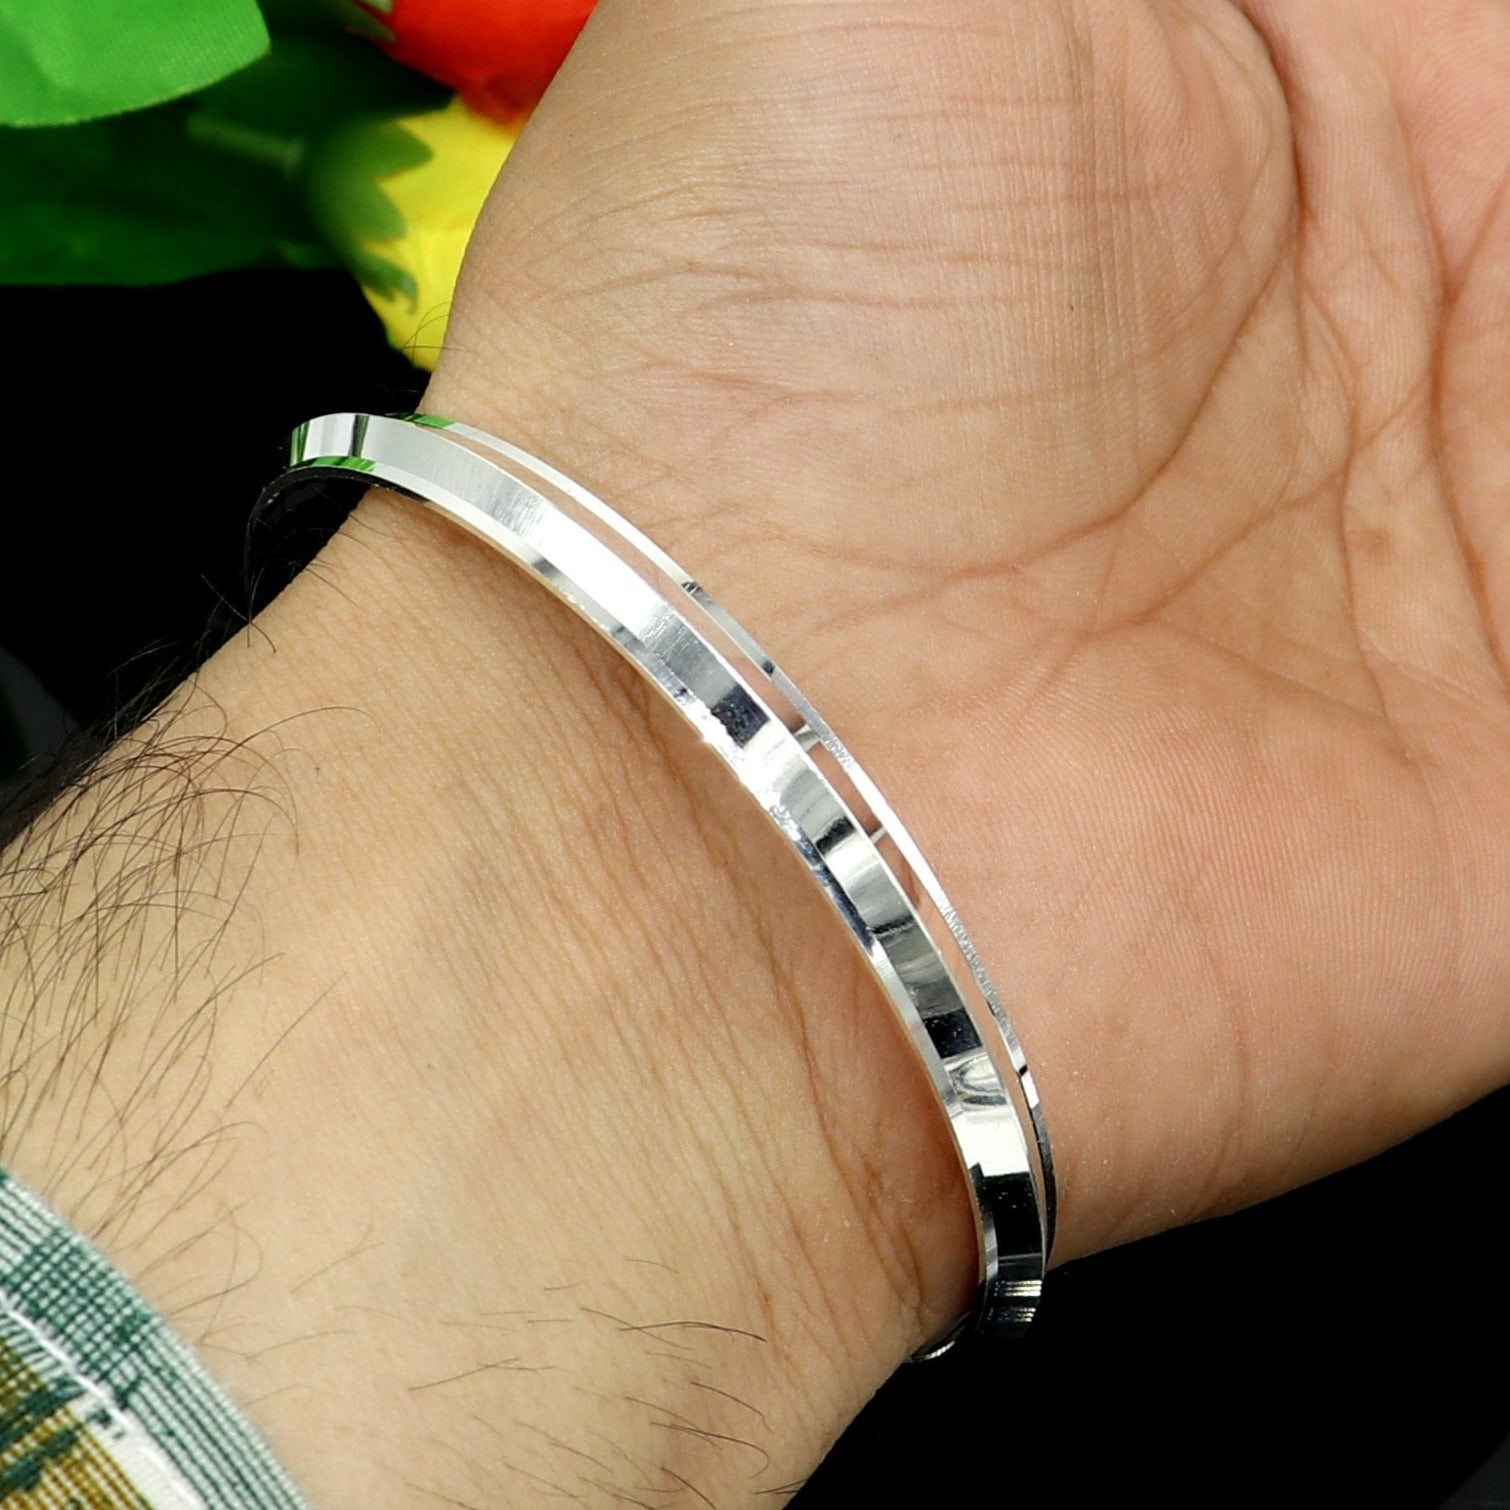 Solid 925 sterling silver handmade punjabi sikha bangle bracelet kada, all sized men's or girl's bangle kada daily use jewelry nsk366 - TRIBAL ORNAMENTS